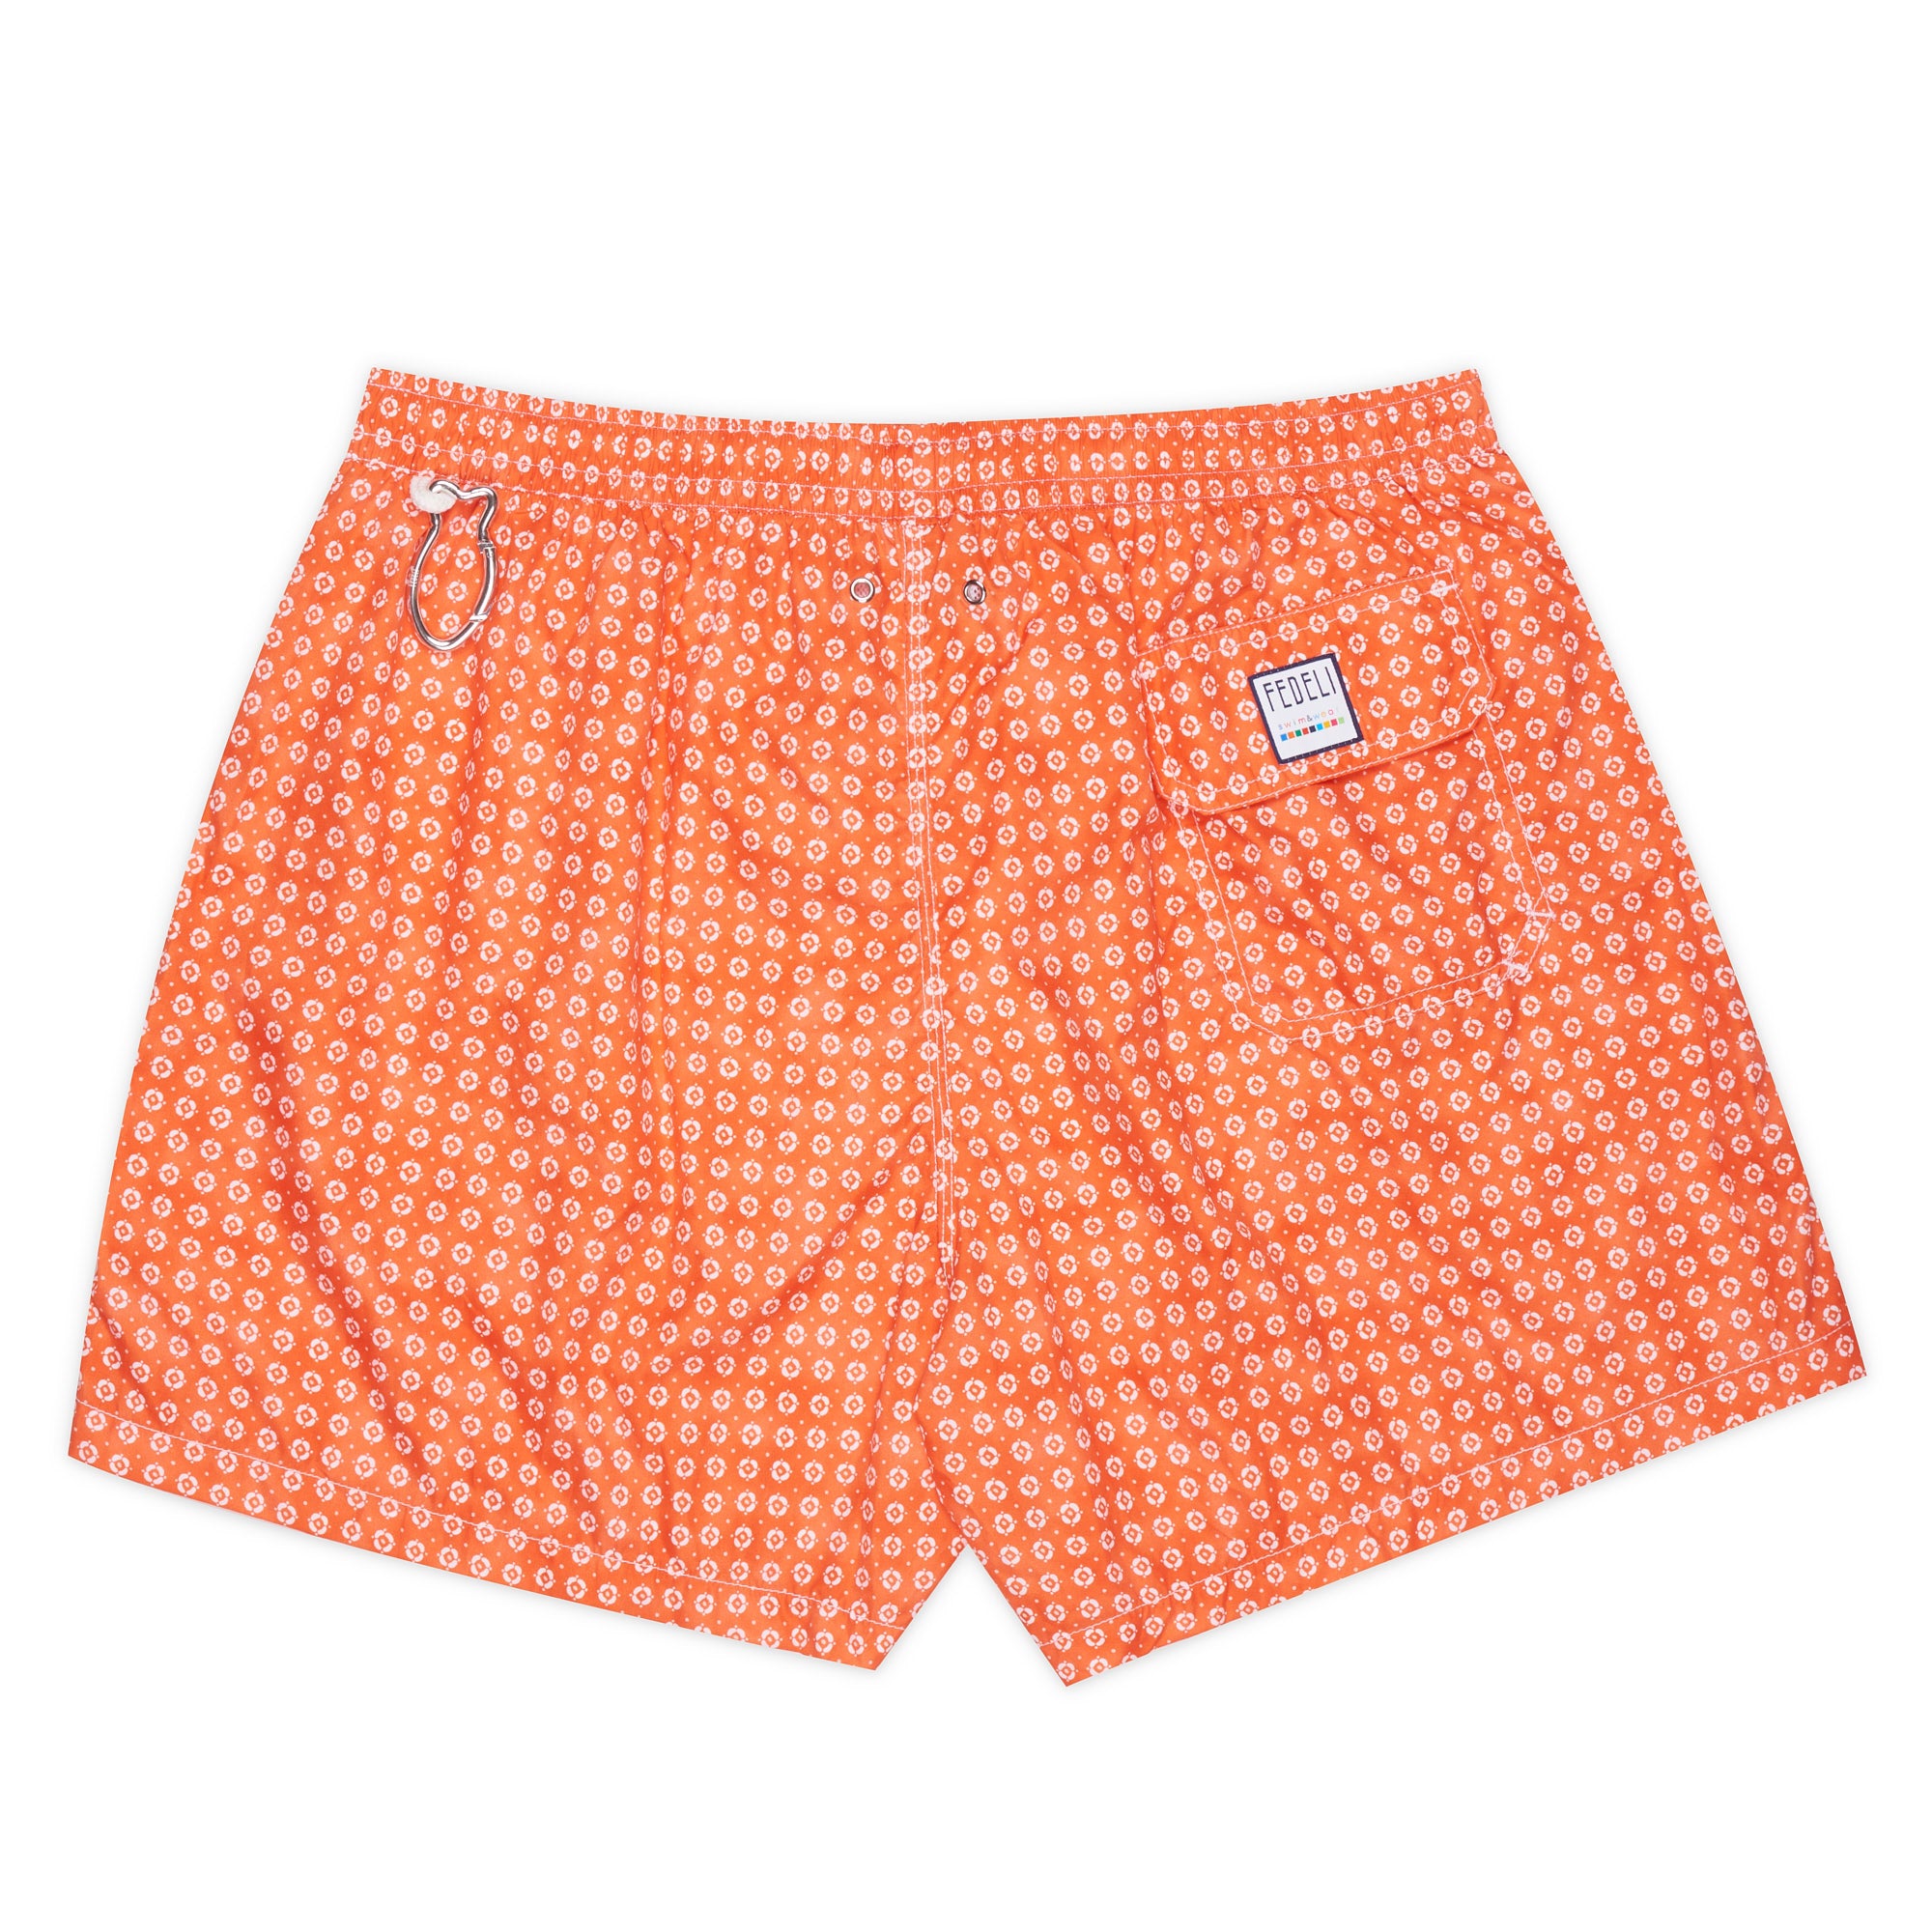 FEDELI Orange Floral Print Maldive Airstop Swim Shorts Trunks NEW